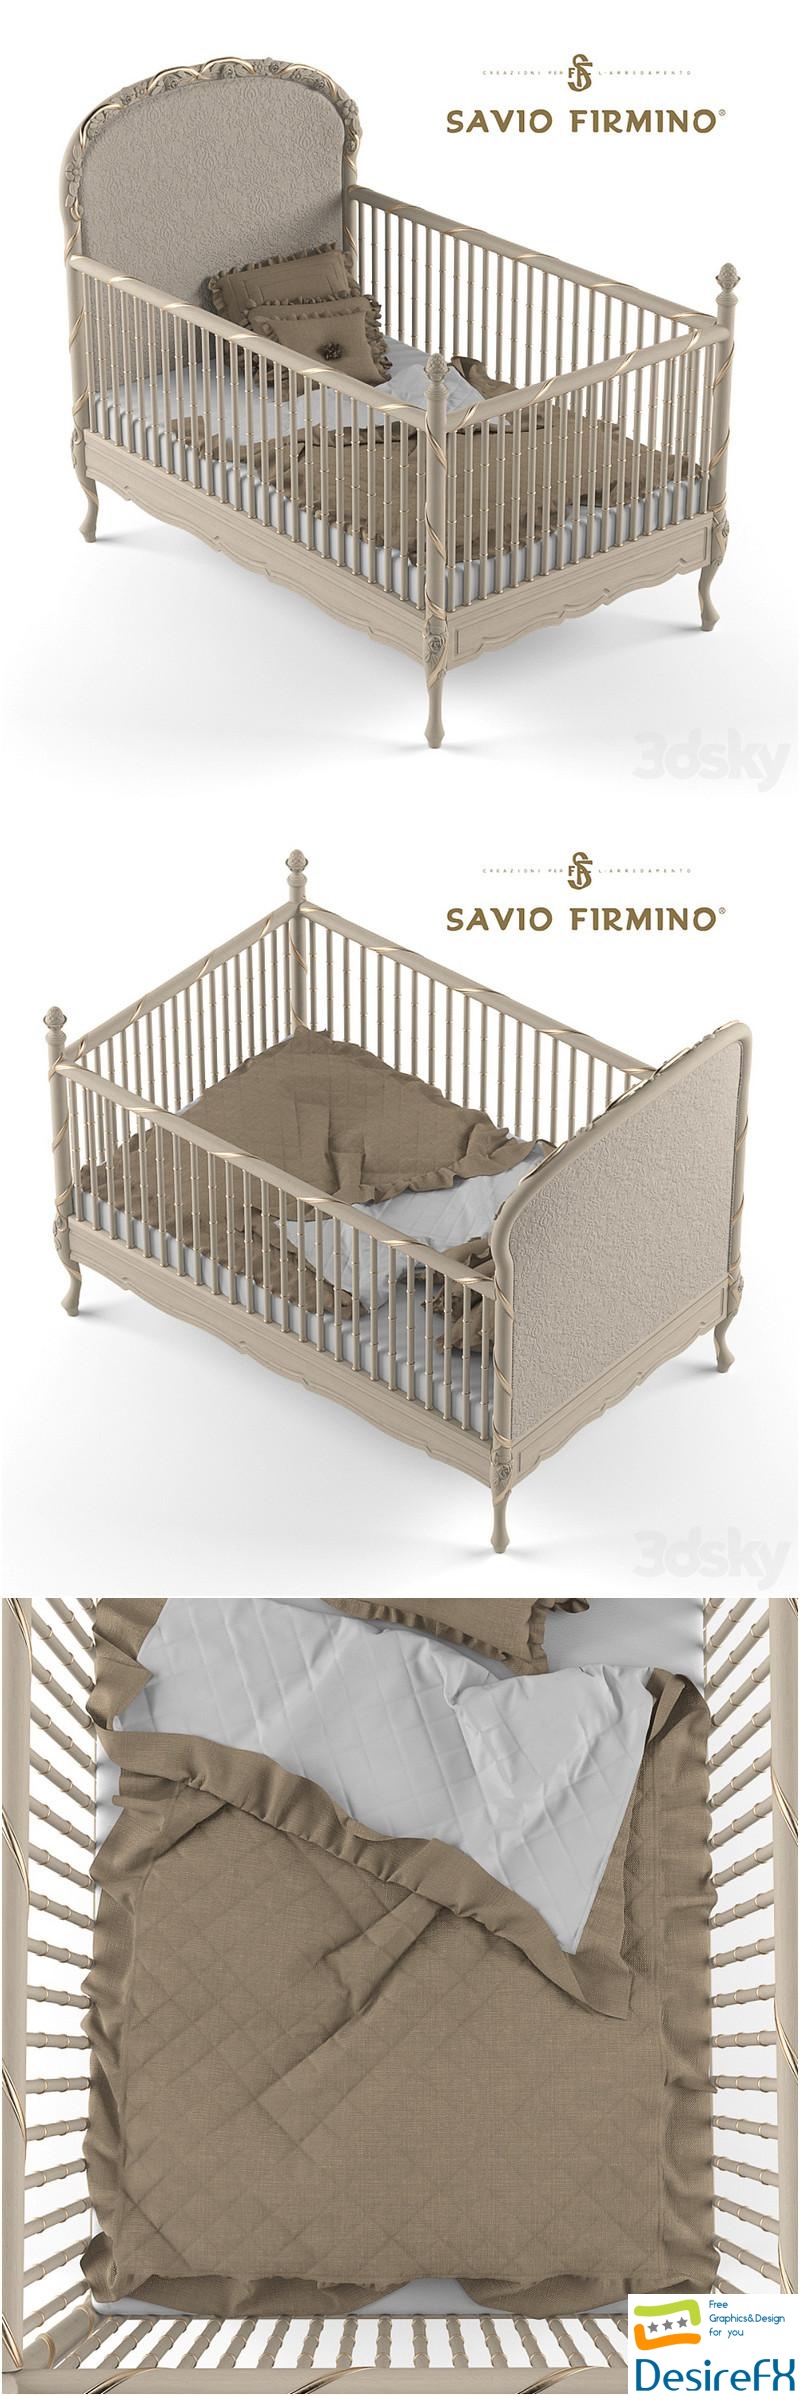 Cot Savio Firmino 3079 3D Model